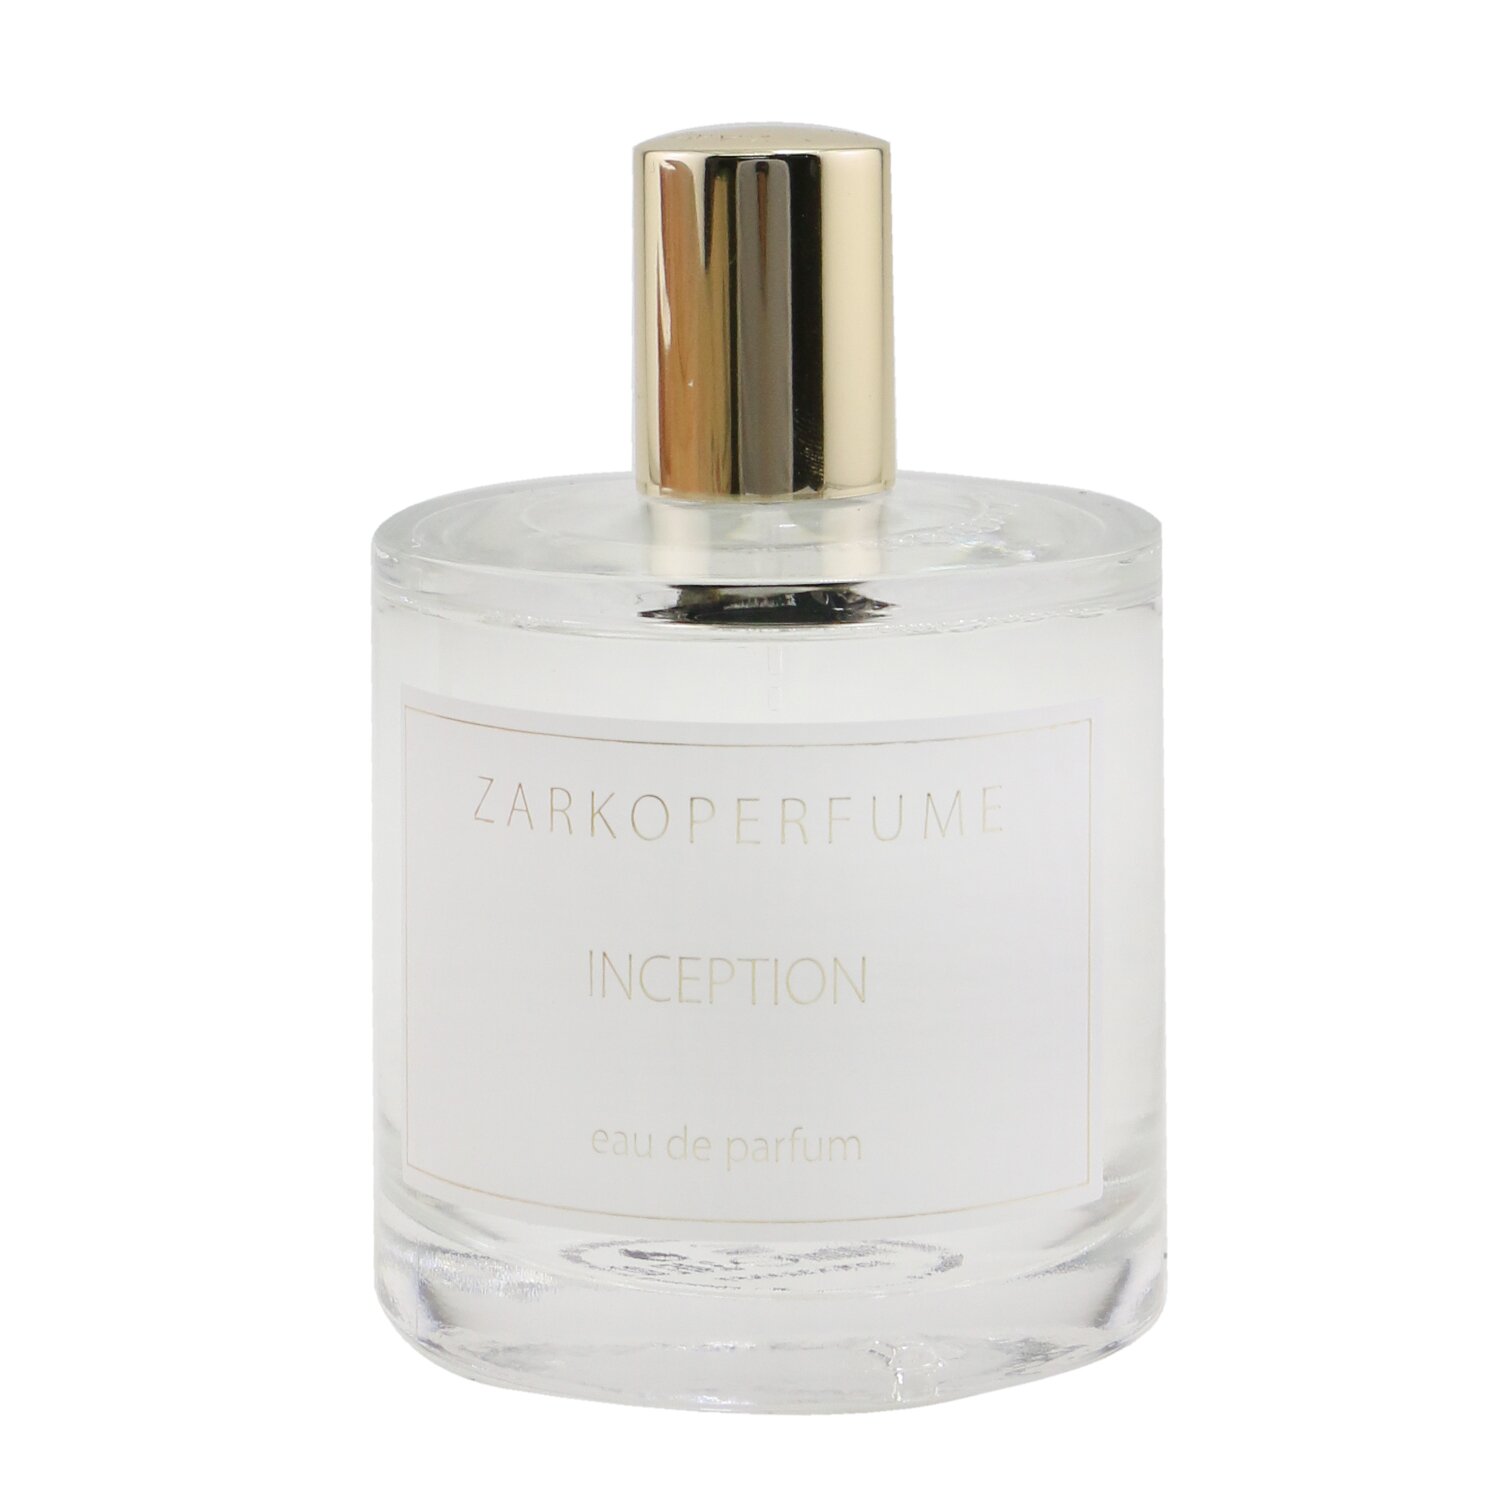 Zarkoperfume - Inception 香水噴霧